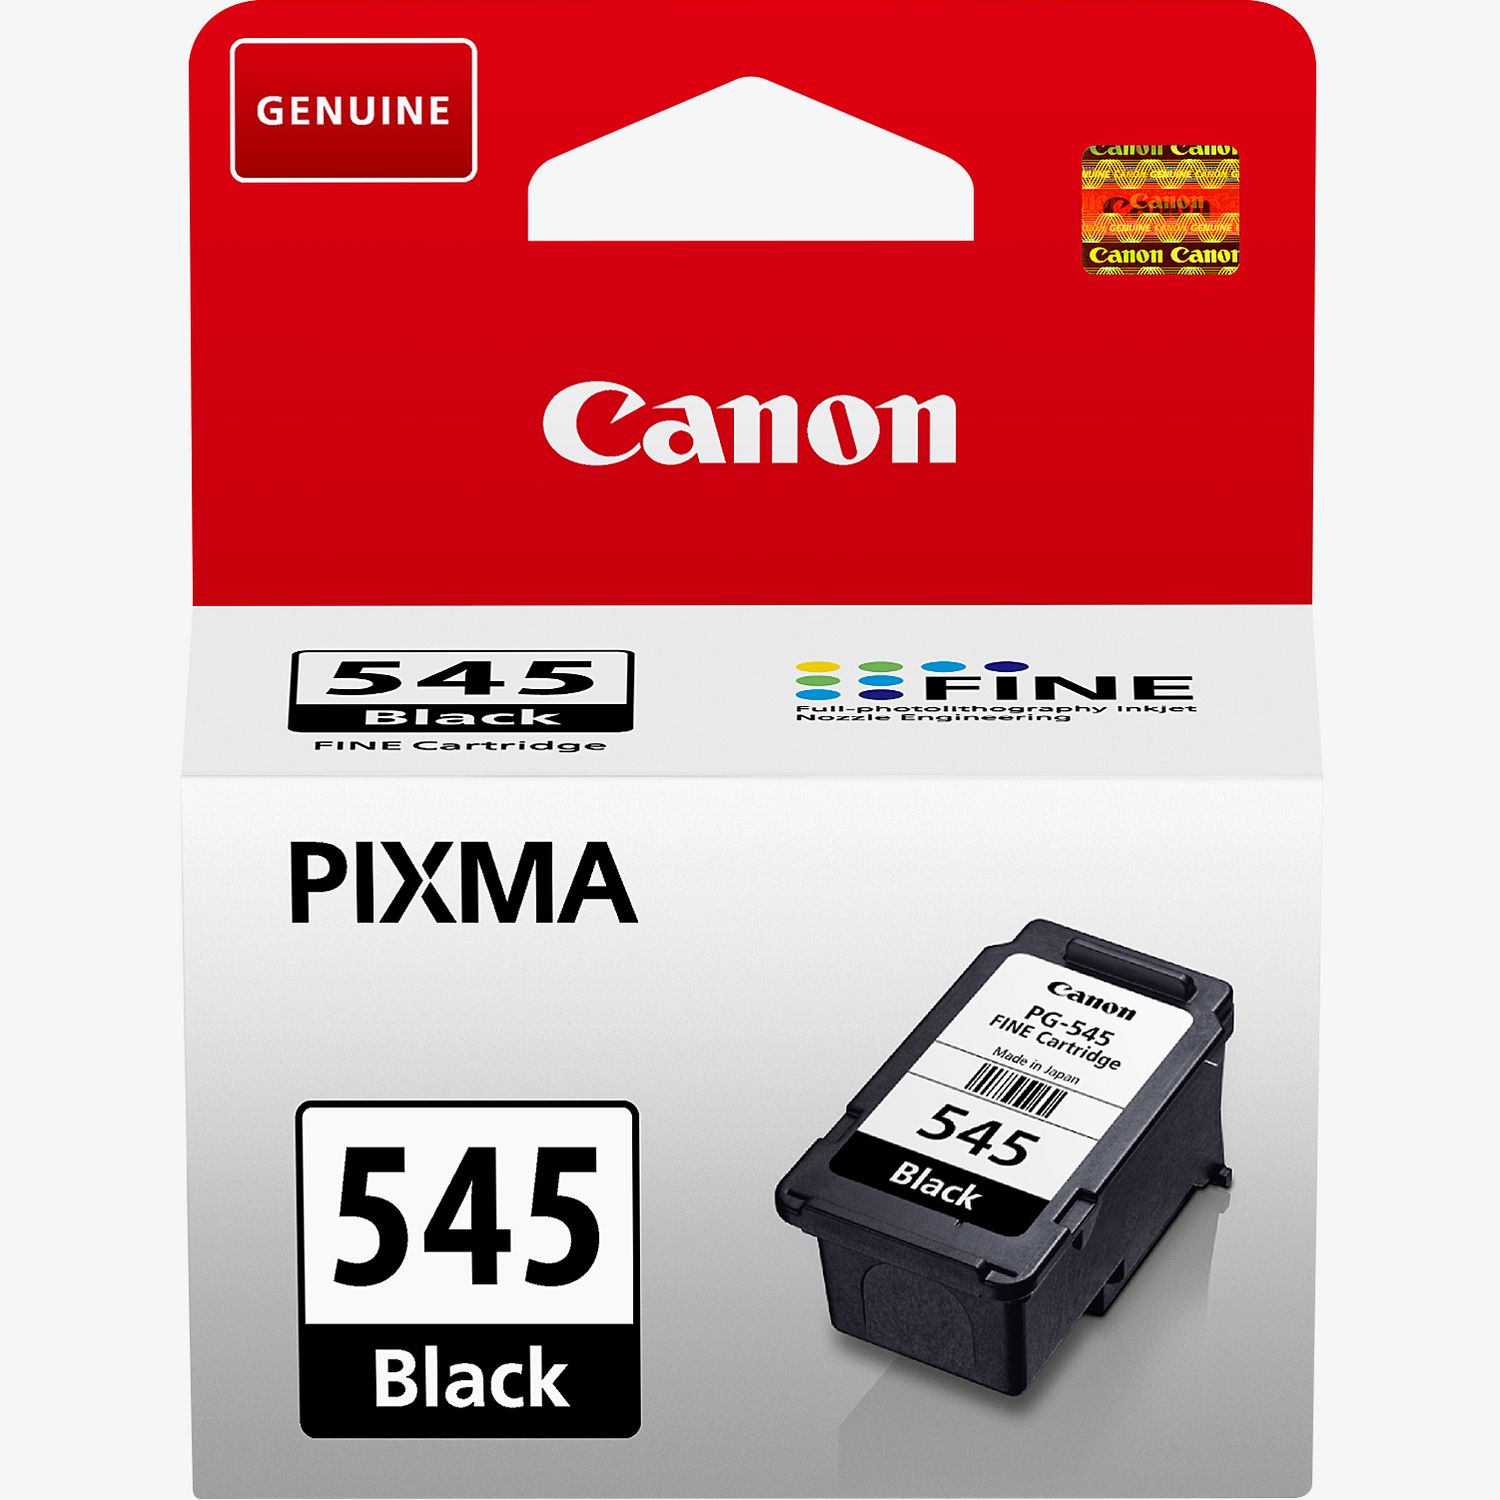 SALE OUT. Canon PIXMA TS3350 EUR BLACK Canon PIXMA TS3350 EUR 3771C006  Colour, Inkjet, Multifunction Printer, A4, Wi-Fi, Black, DAMAGED PACKAGING  - Printers - Photo printer -outofstock